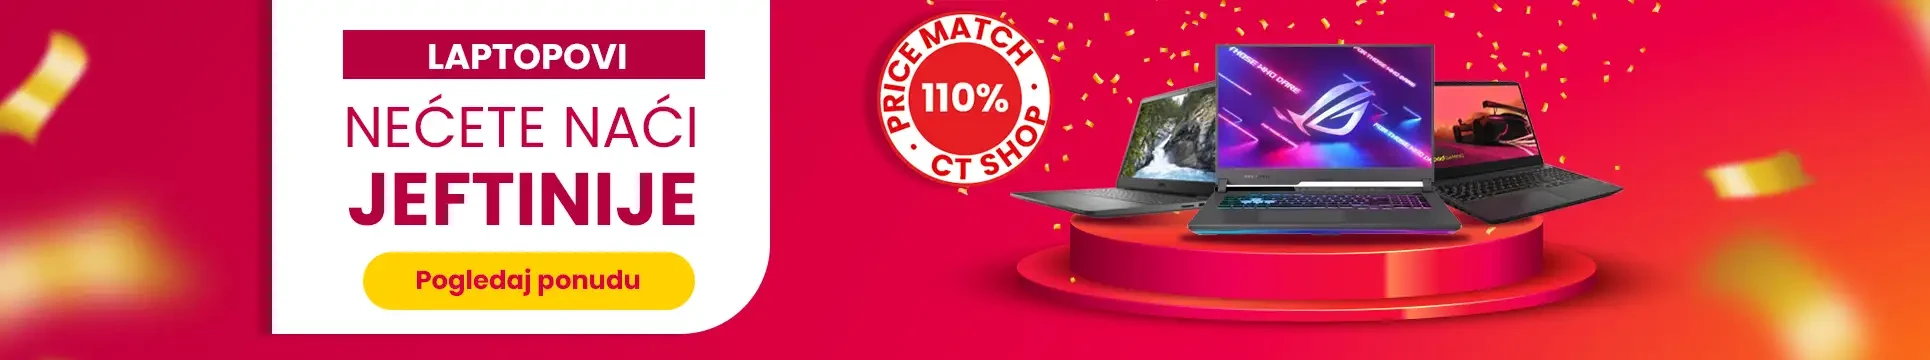 price_match_laptopovi_mar24